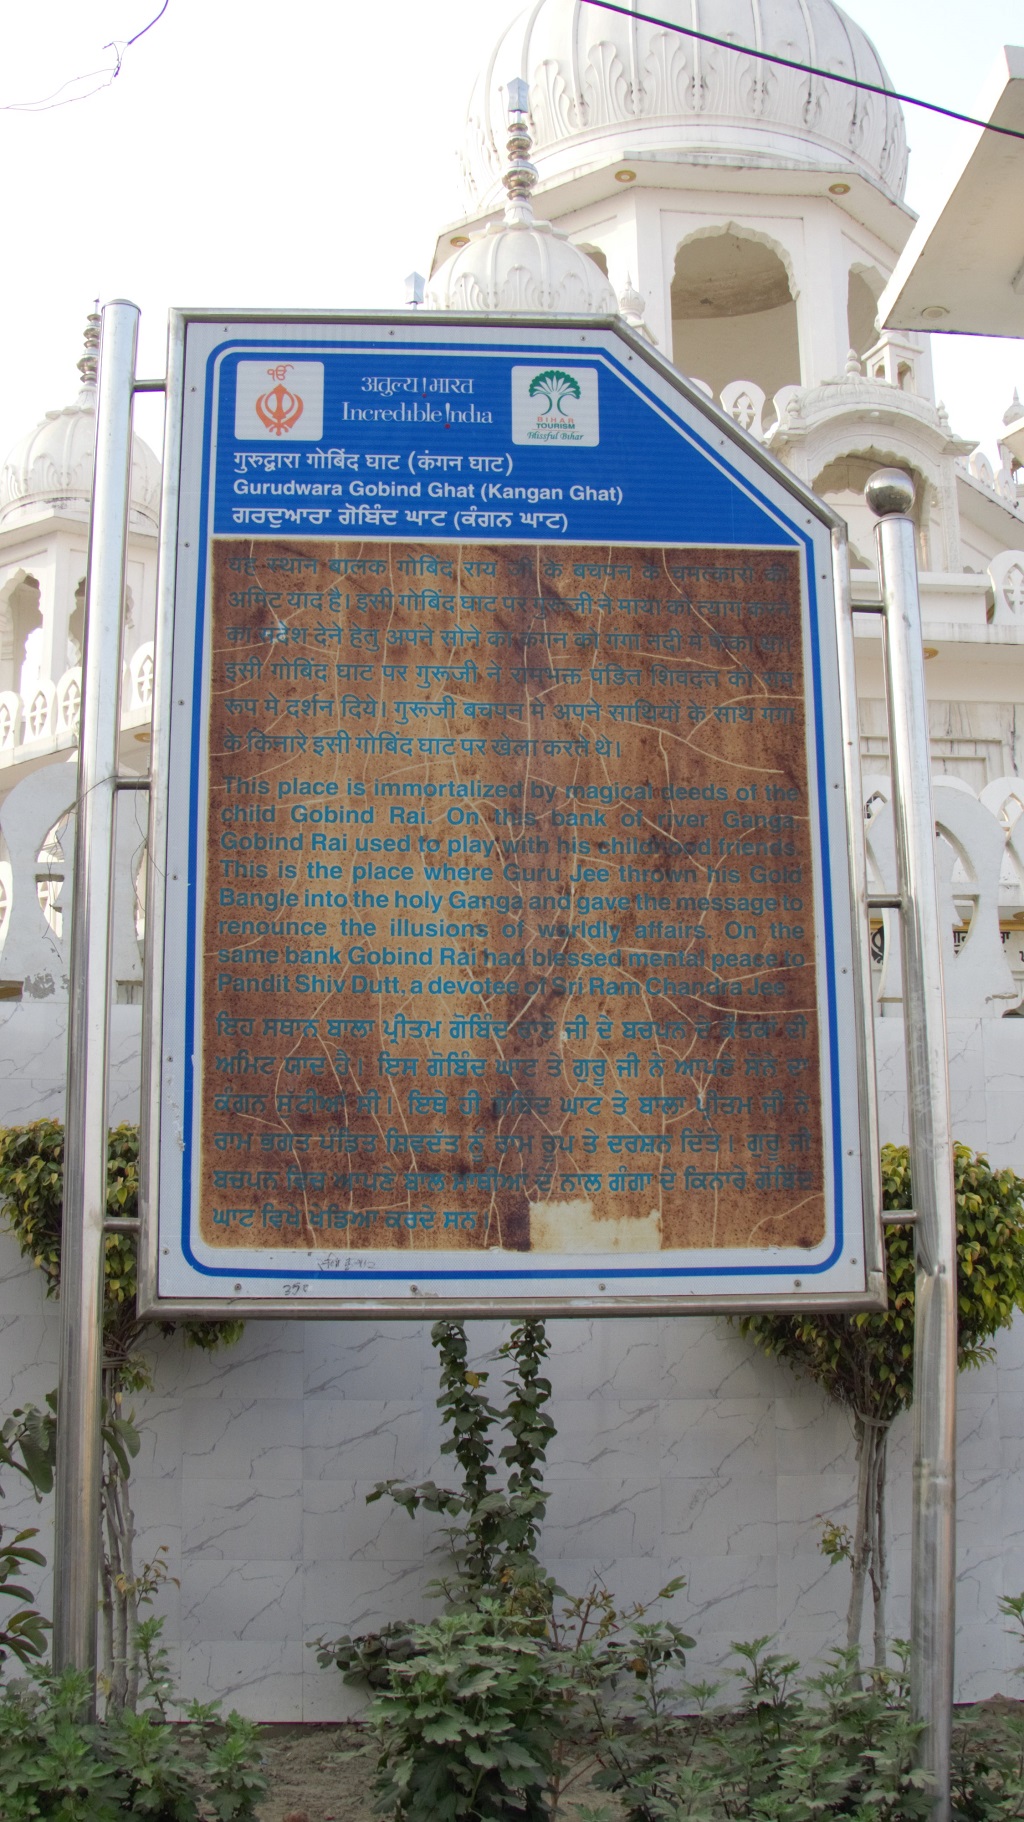 About - Gurudwara Gobind Ghat (Kangan Ghat, Patna Sahib, Bihar, India)